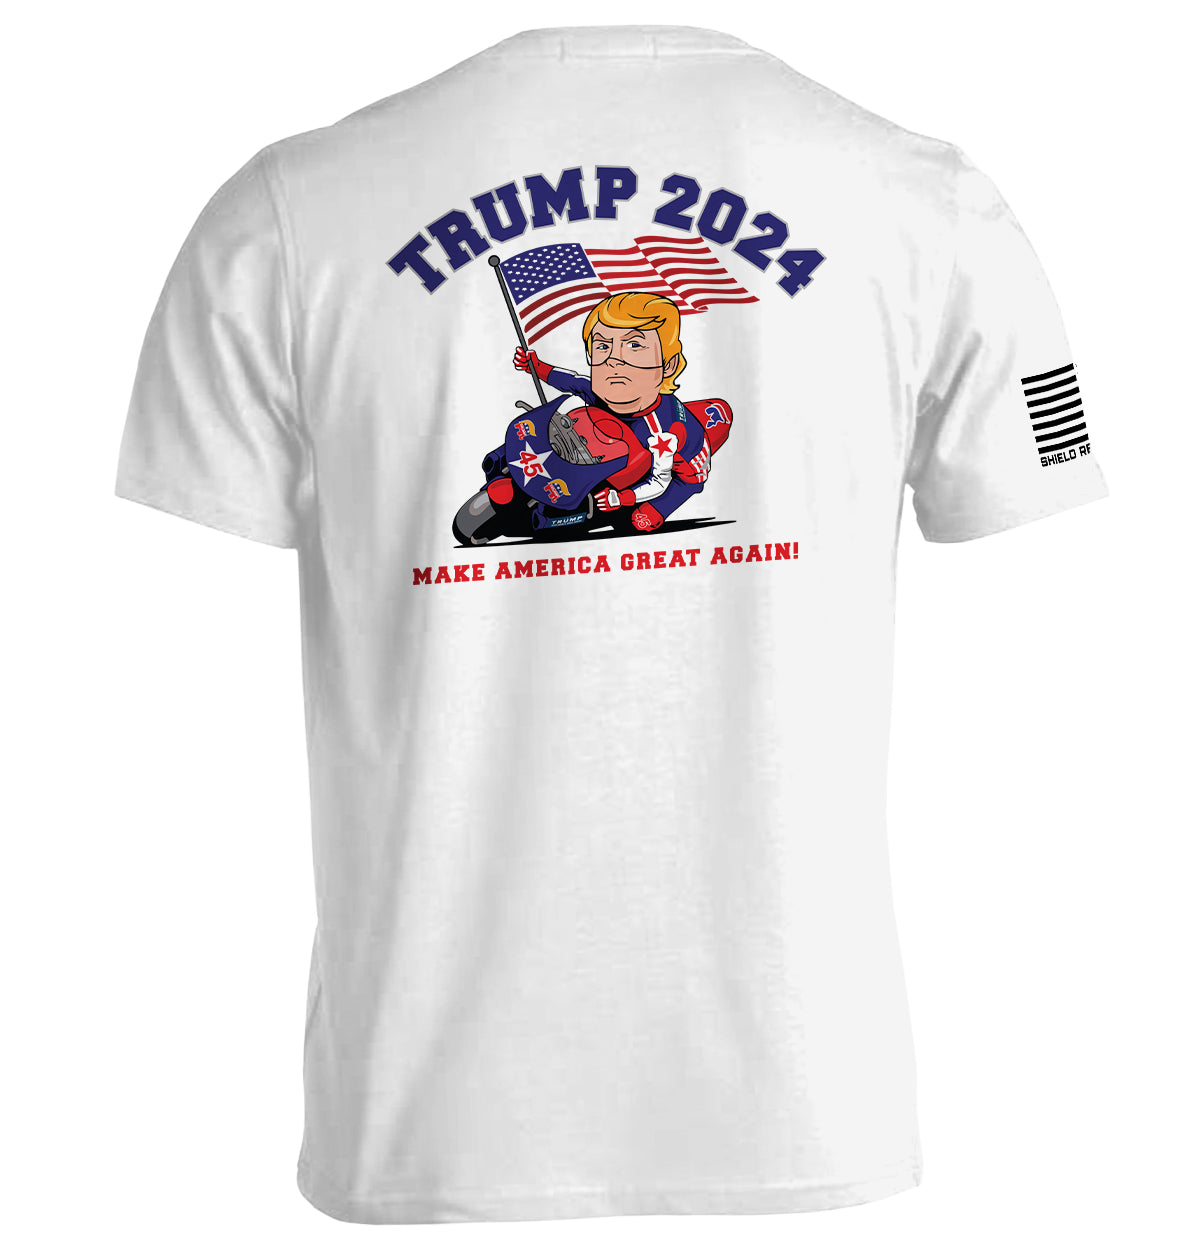 Racing Trump 2024